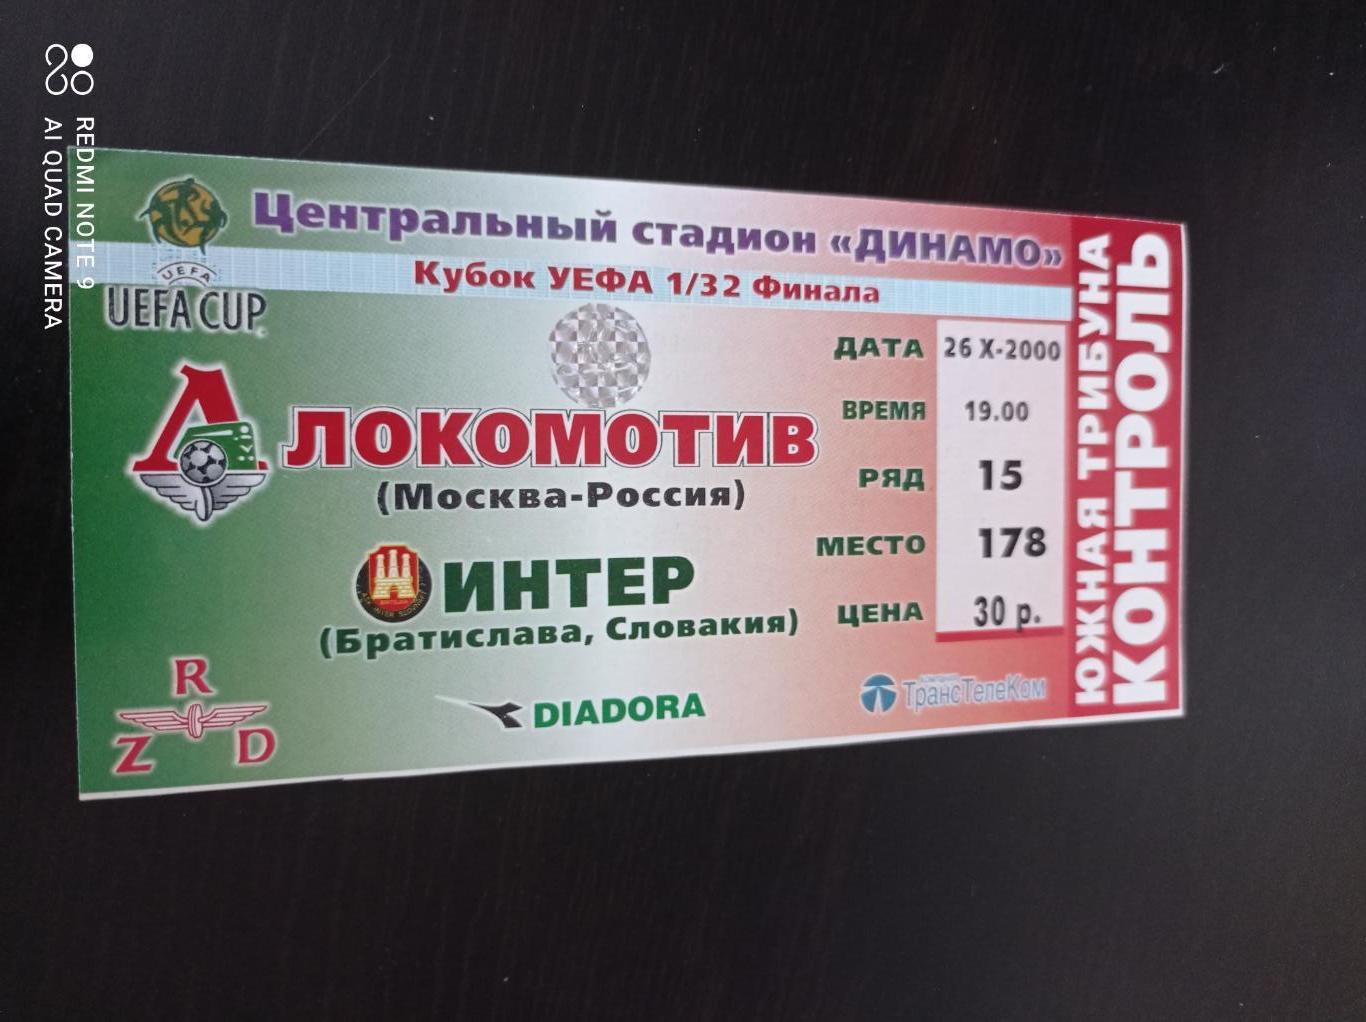 Локомотив - Интер 2000